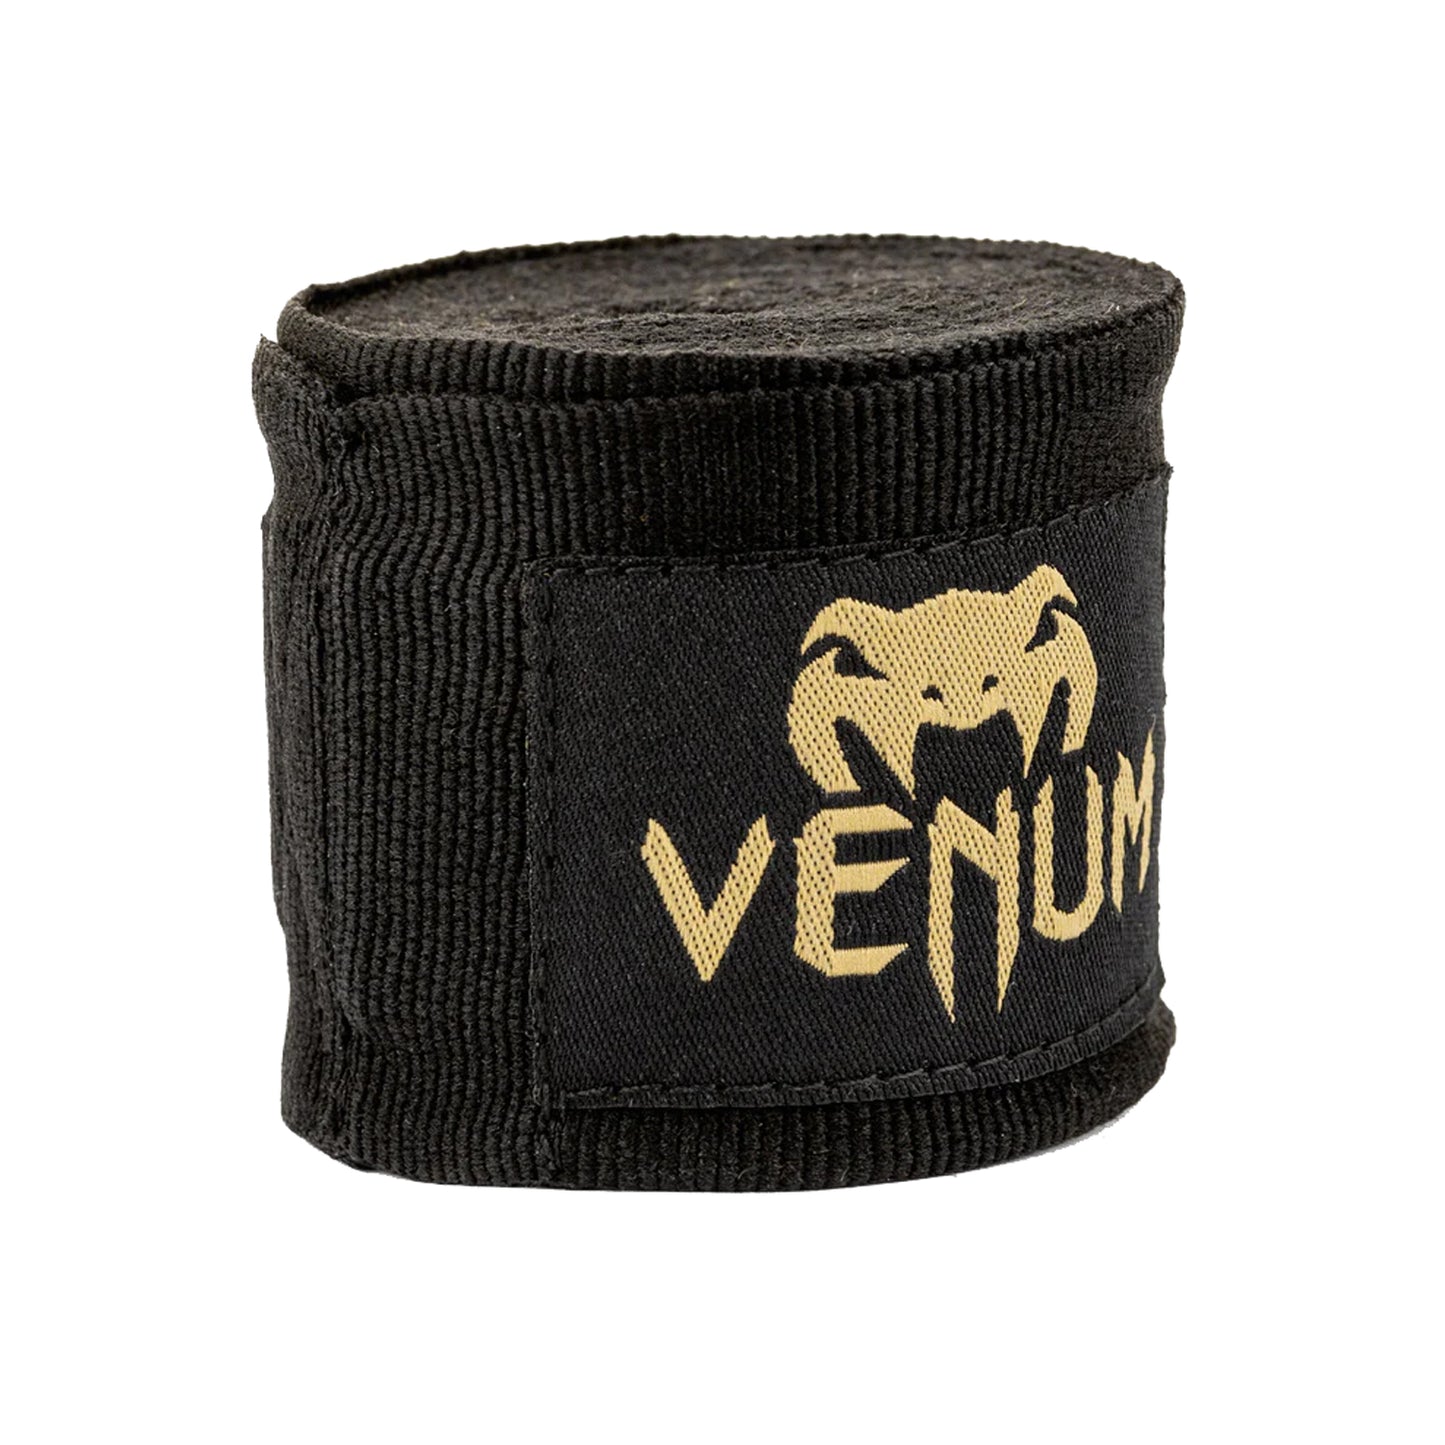 Venum Kontact Boxing Hand Wraps, 4.5 Mtrs - Best Price online Prokicksports.com